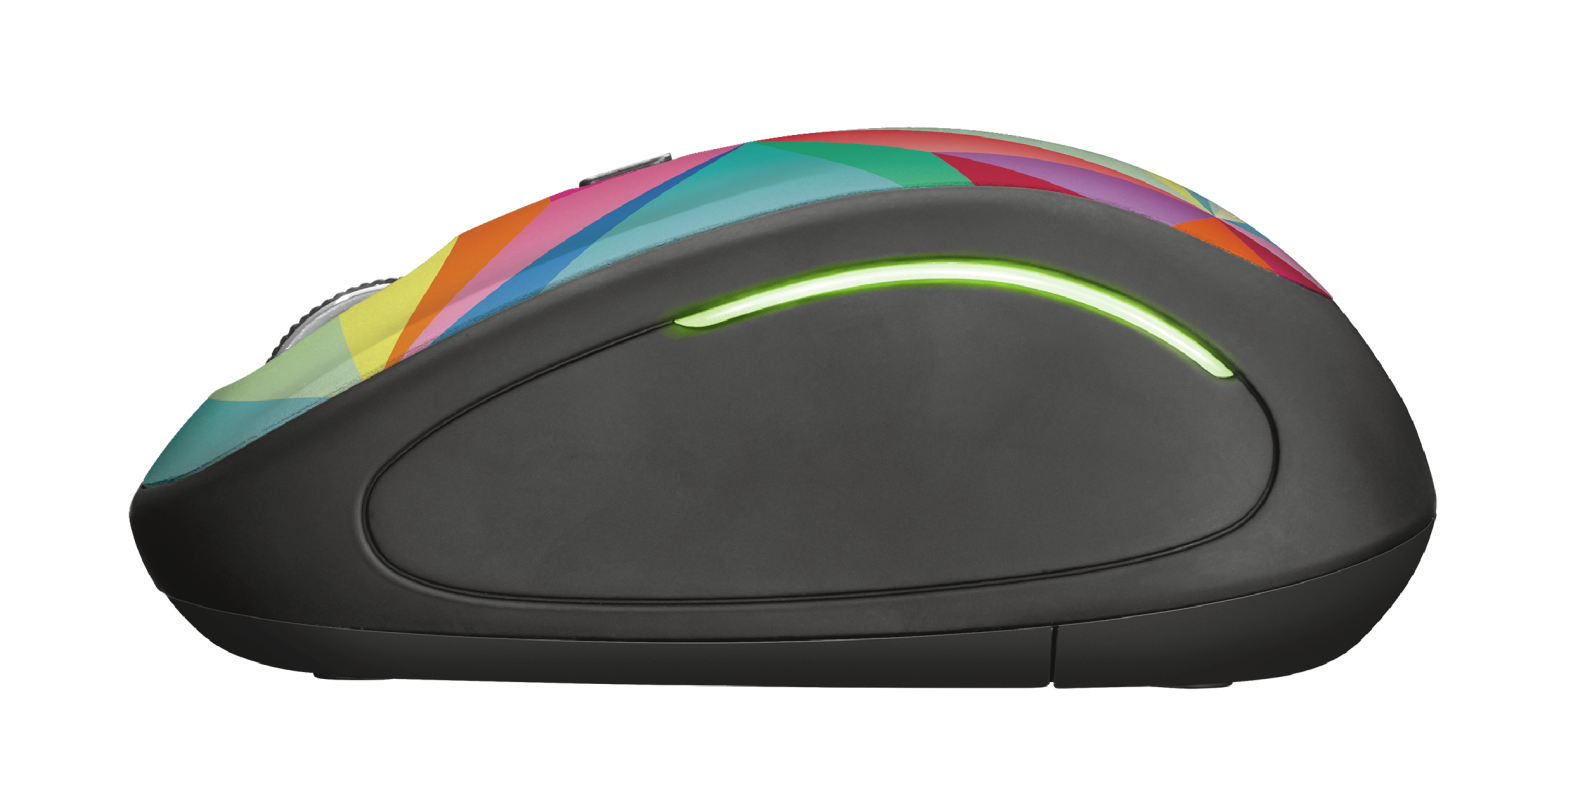 Yvi FX Wireless Mouse - geometrics-Side